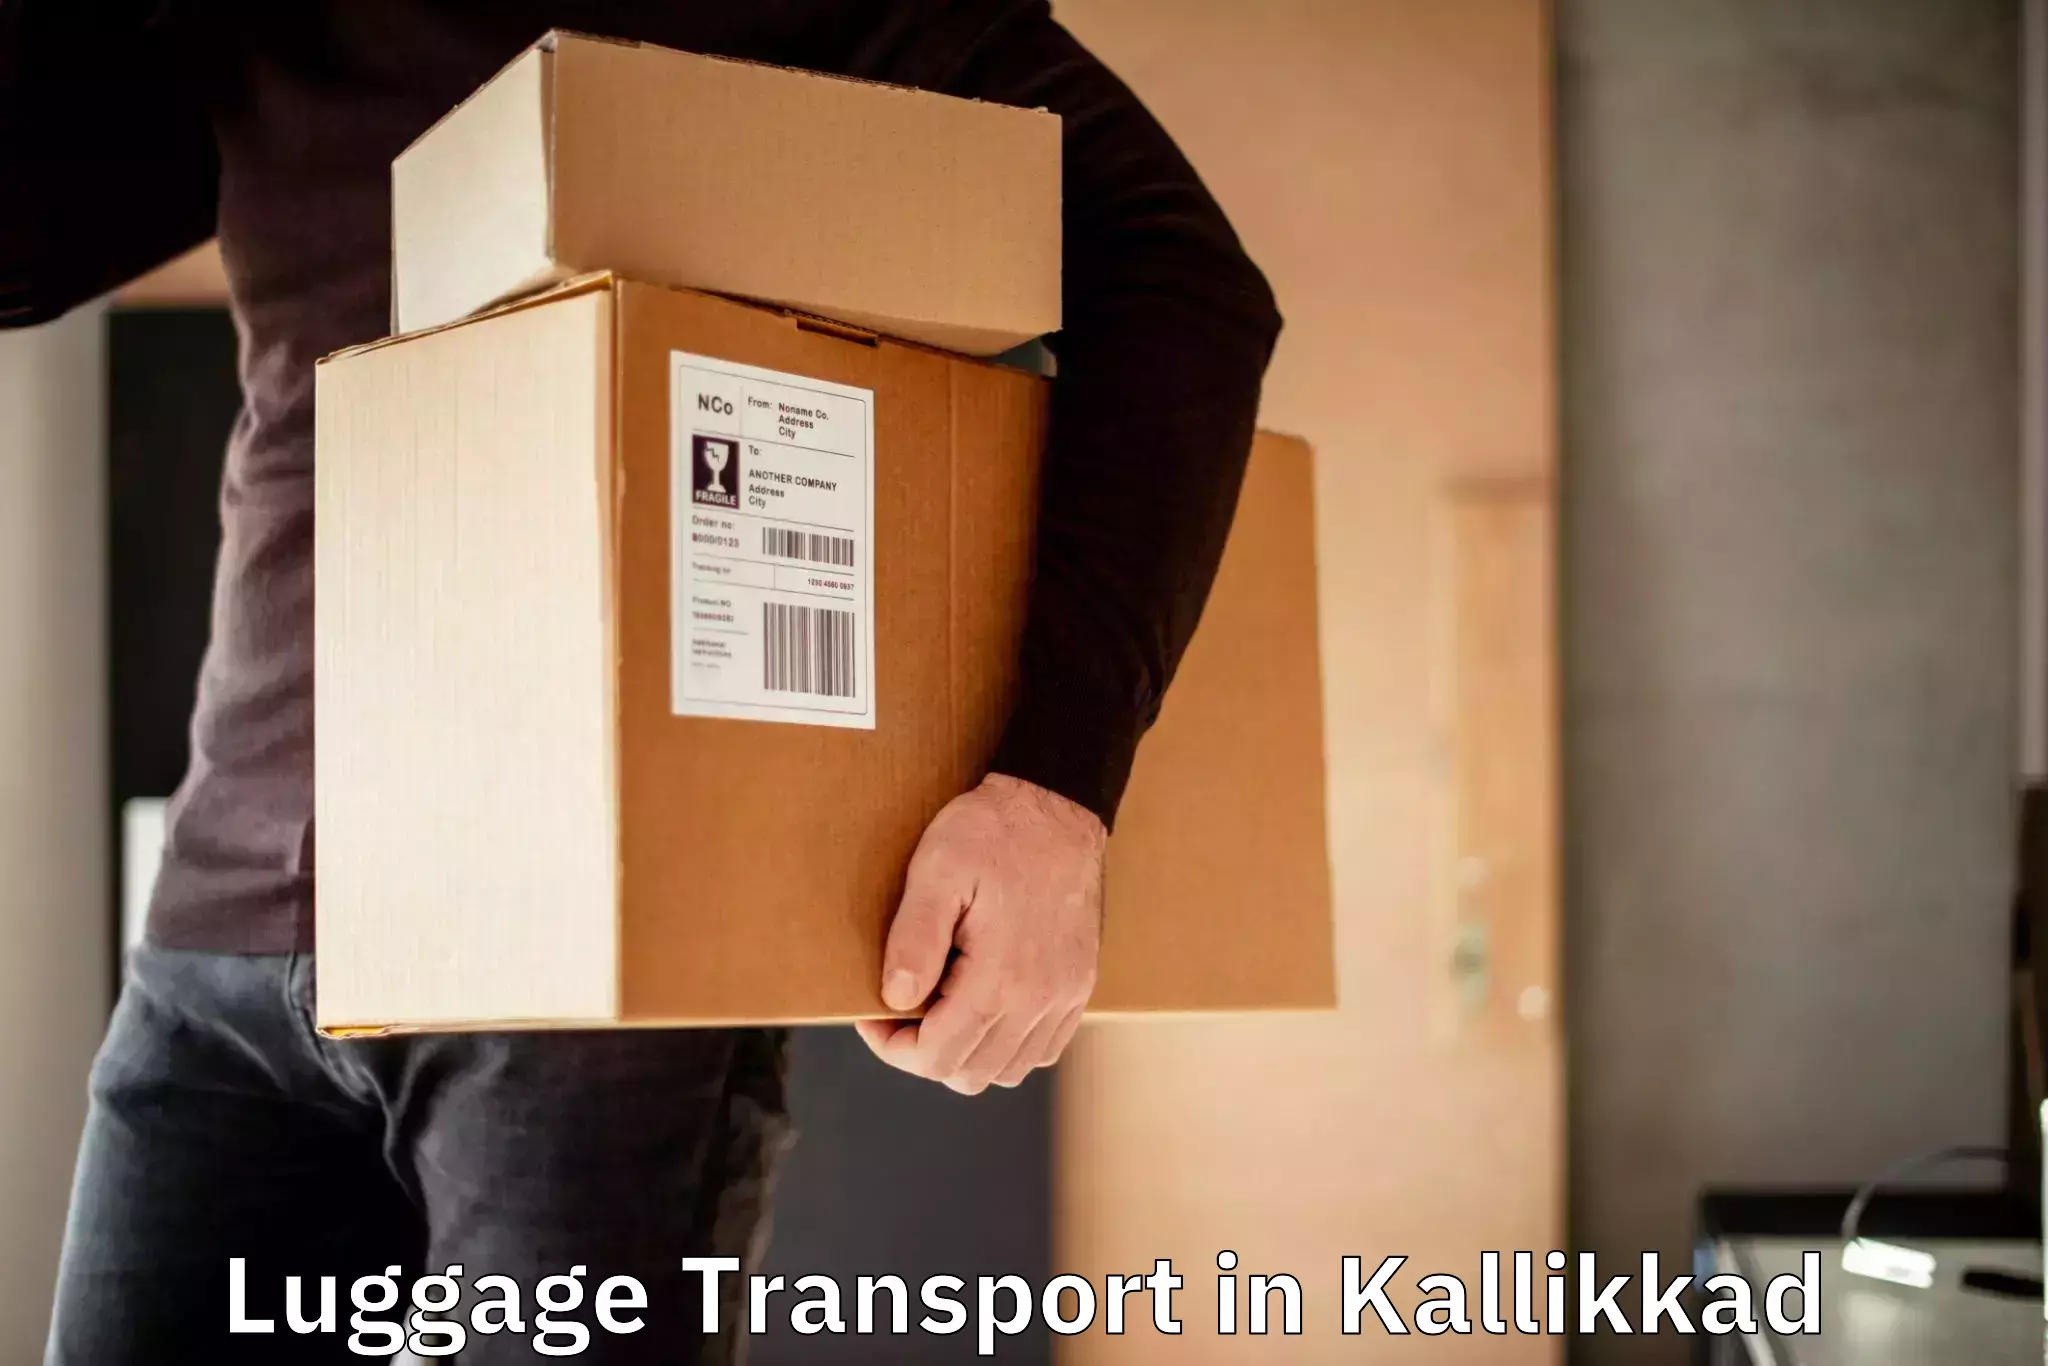 Efficient baggage transport in Kallikkad